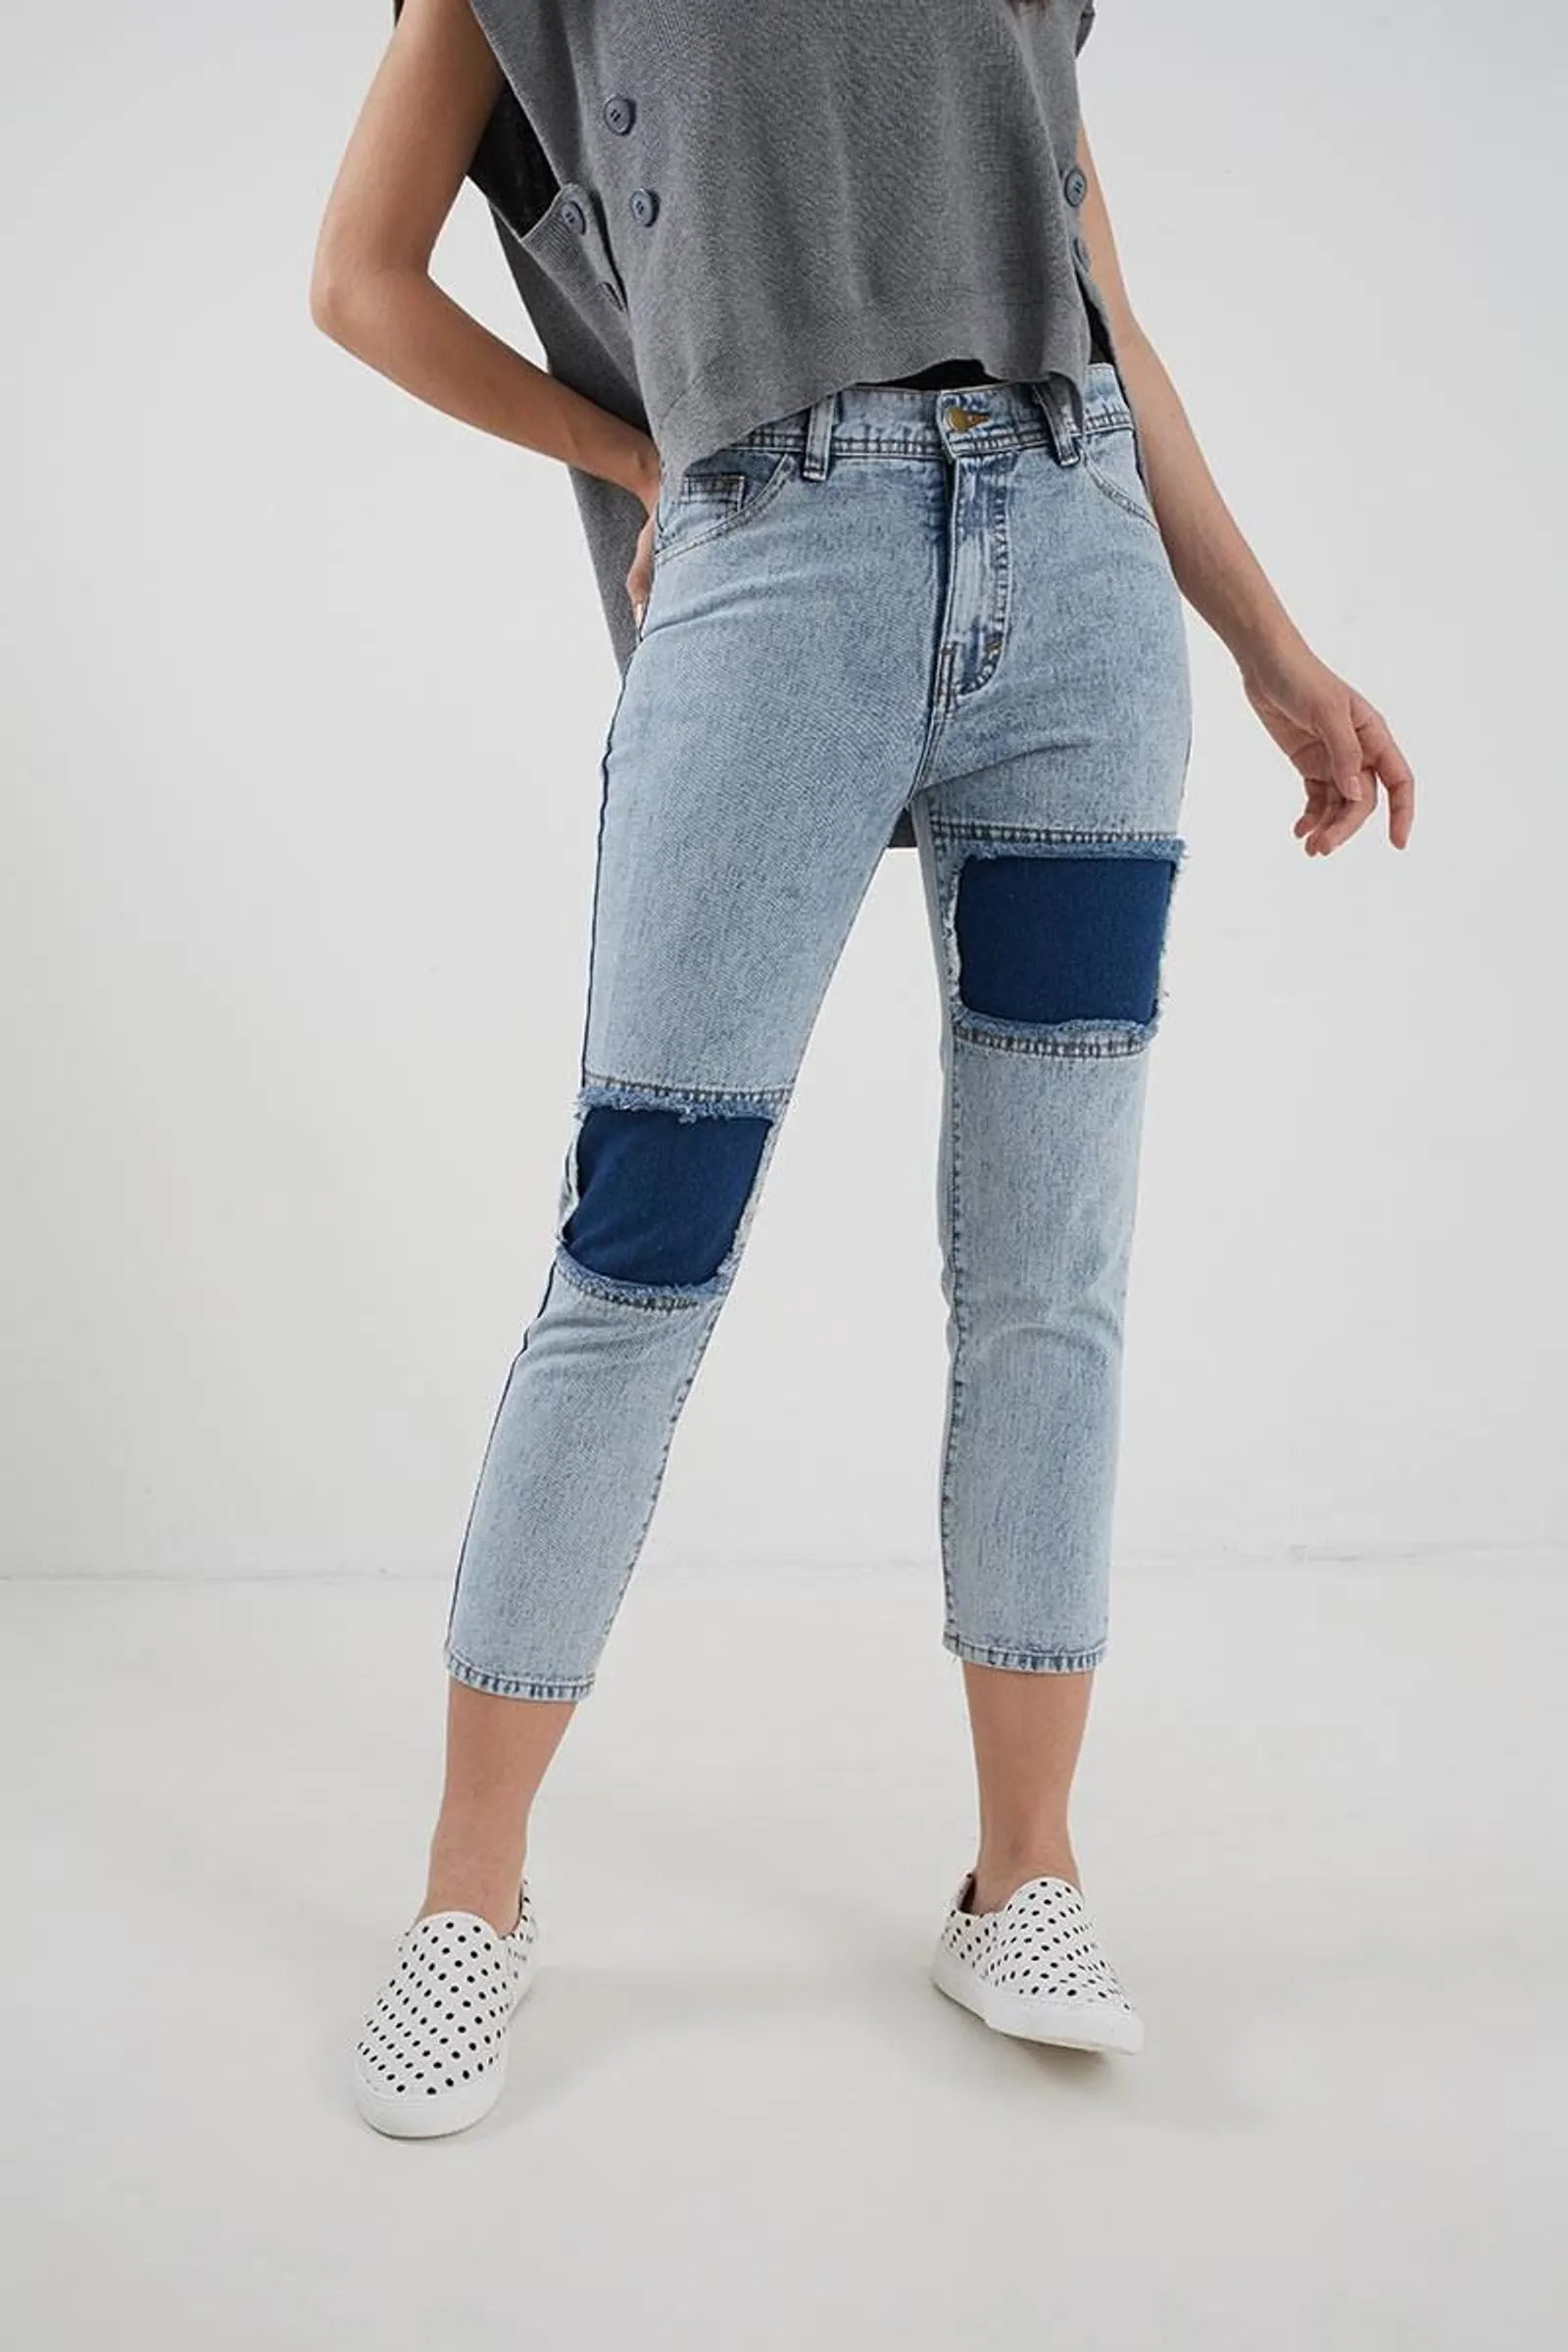 #PopbelaOOTD: Gaya Simpel Jadi Lebih Keren Pakai Celana Jeans!